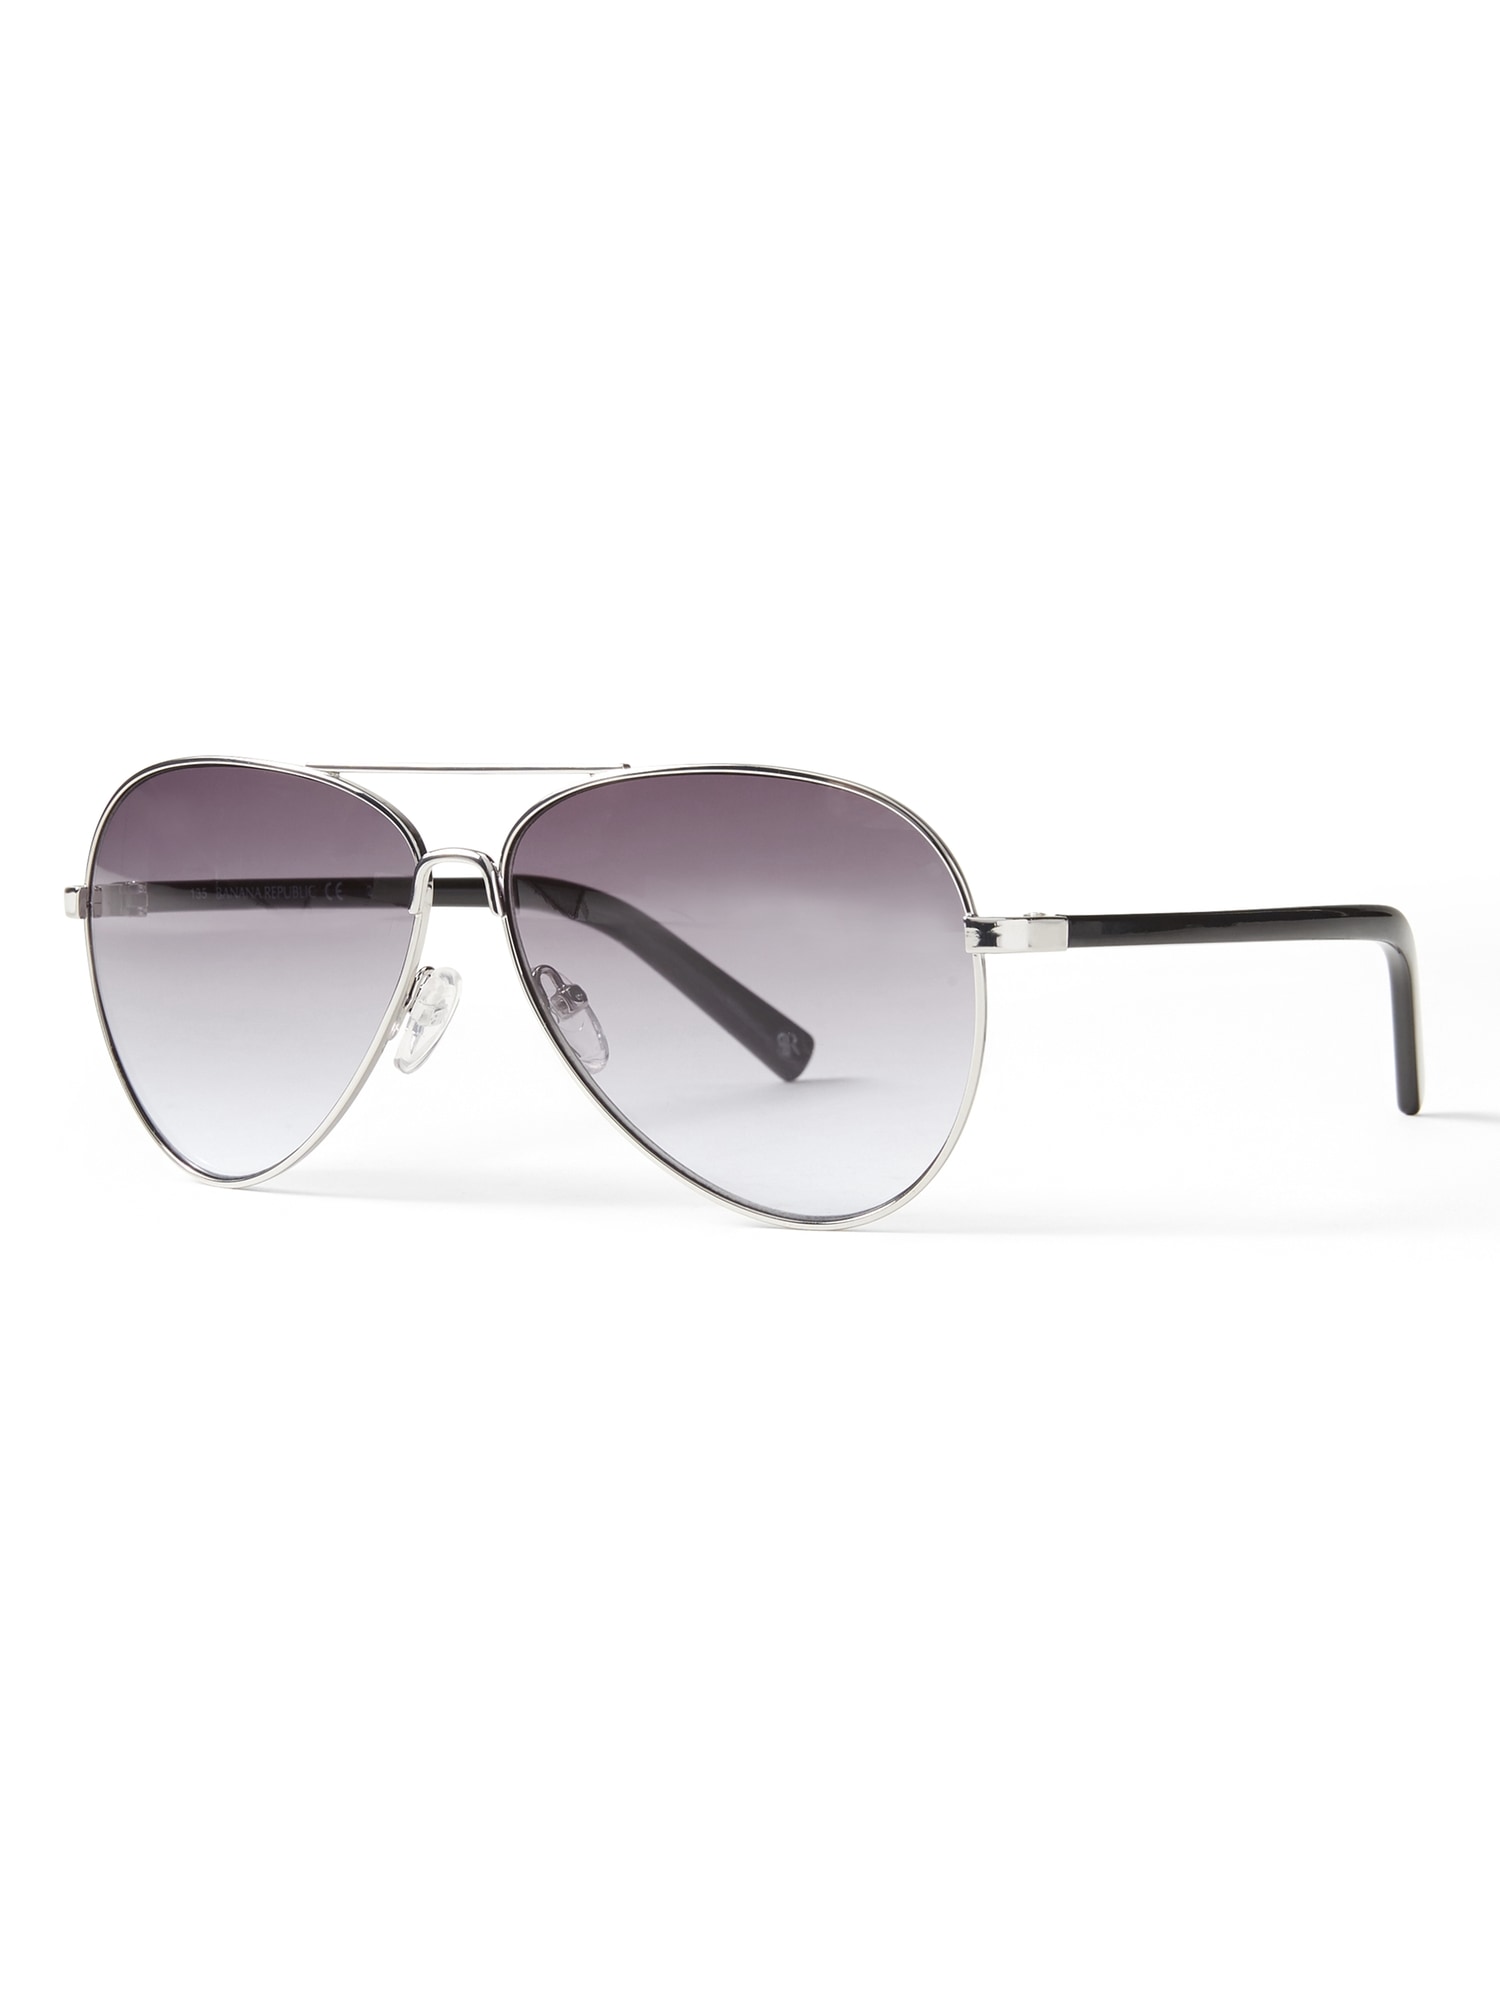 Leighton Sunglasses